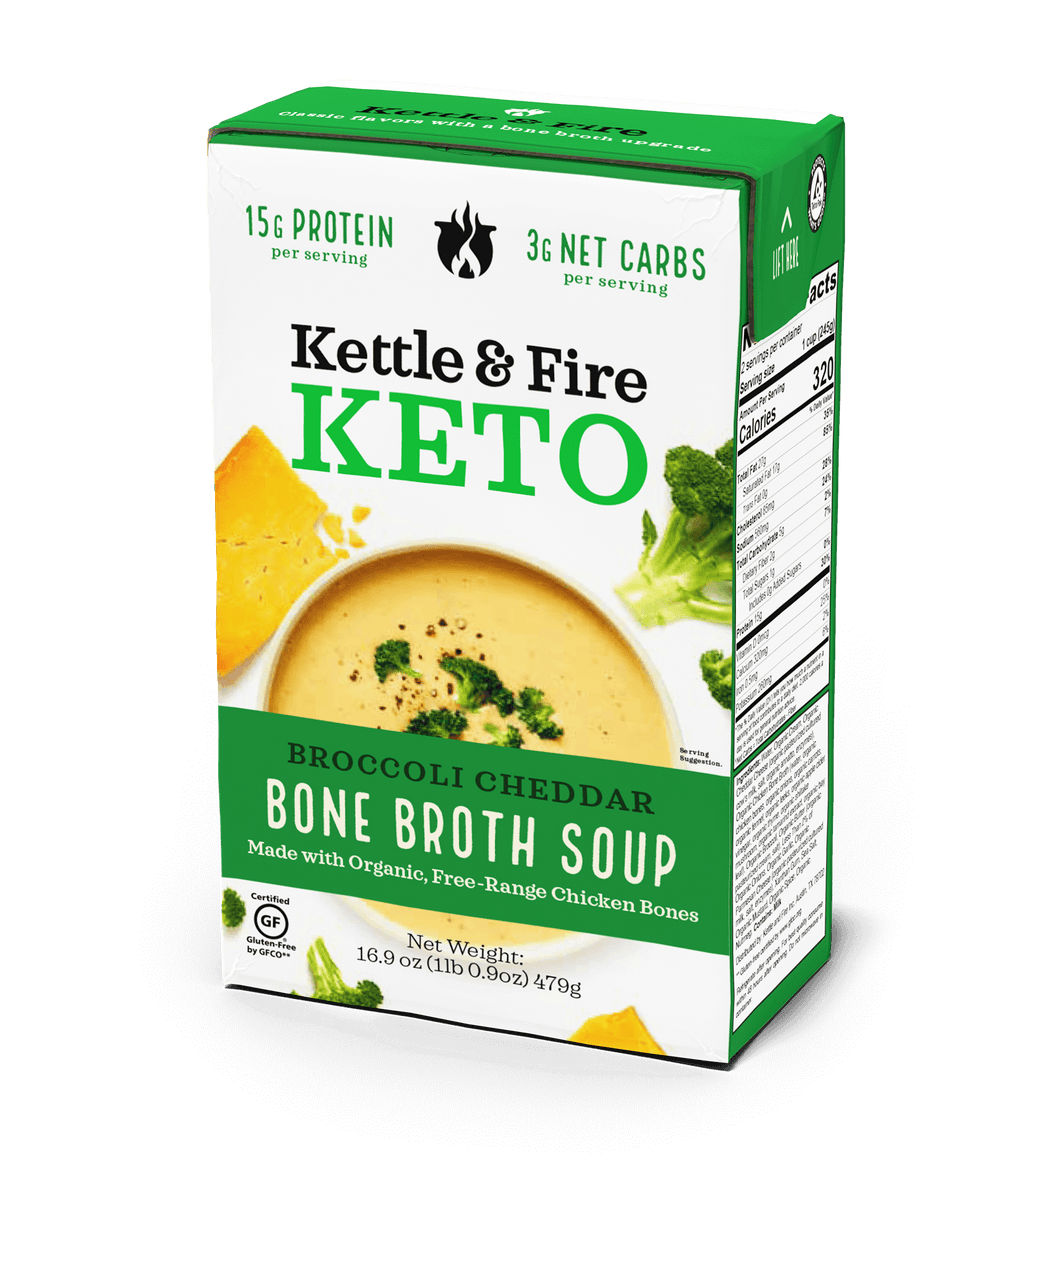 Kettle & Fire - Broccoli Cheddar Keto Soup 16.9oz